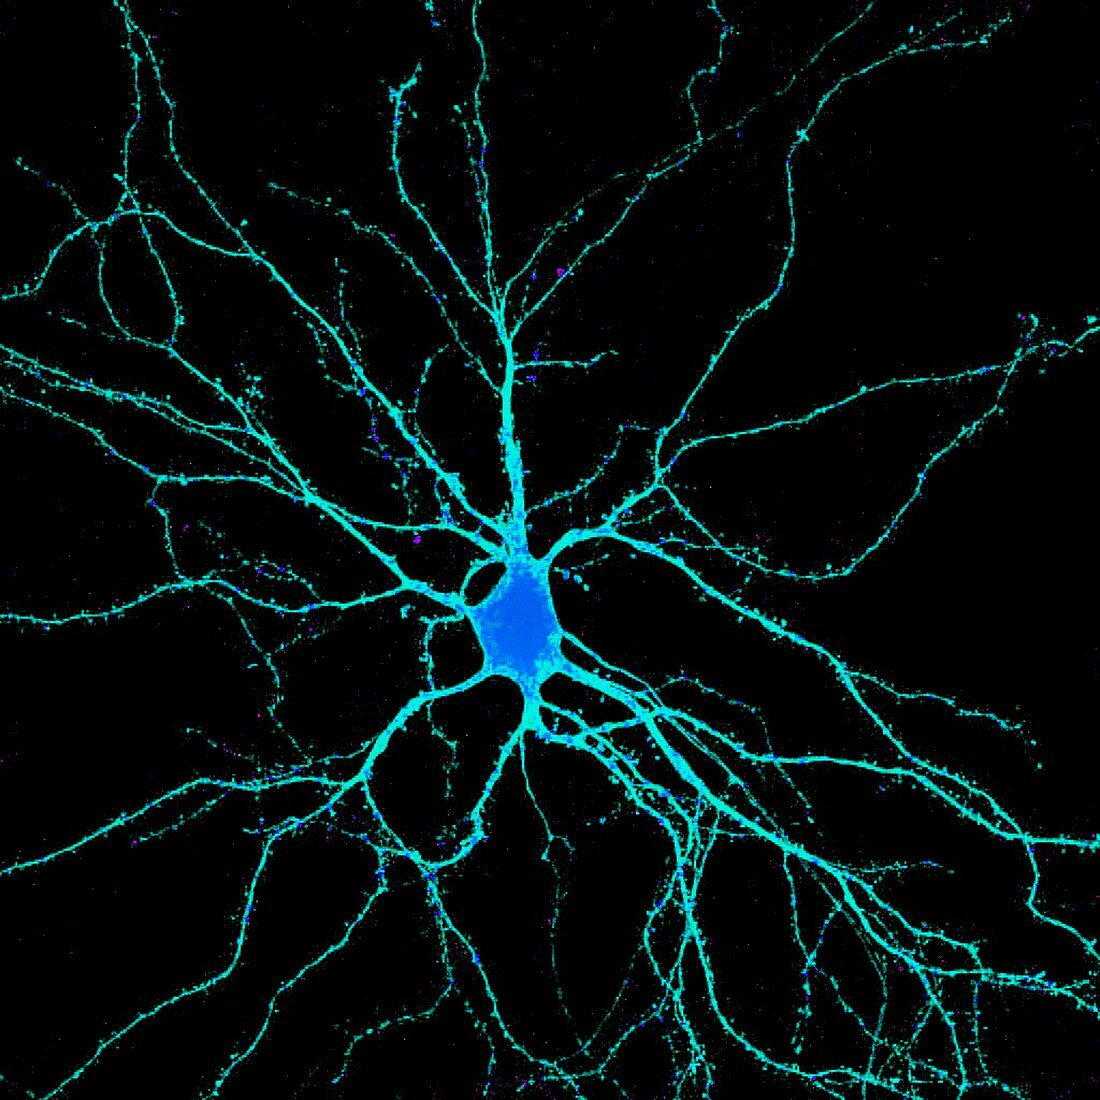 Neuron,fluorescence micrograph